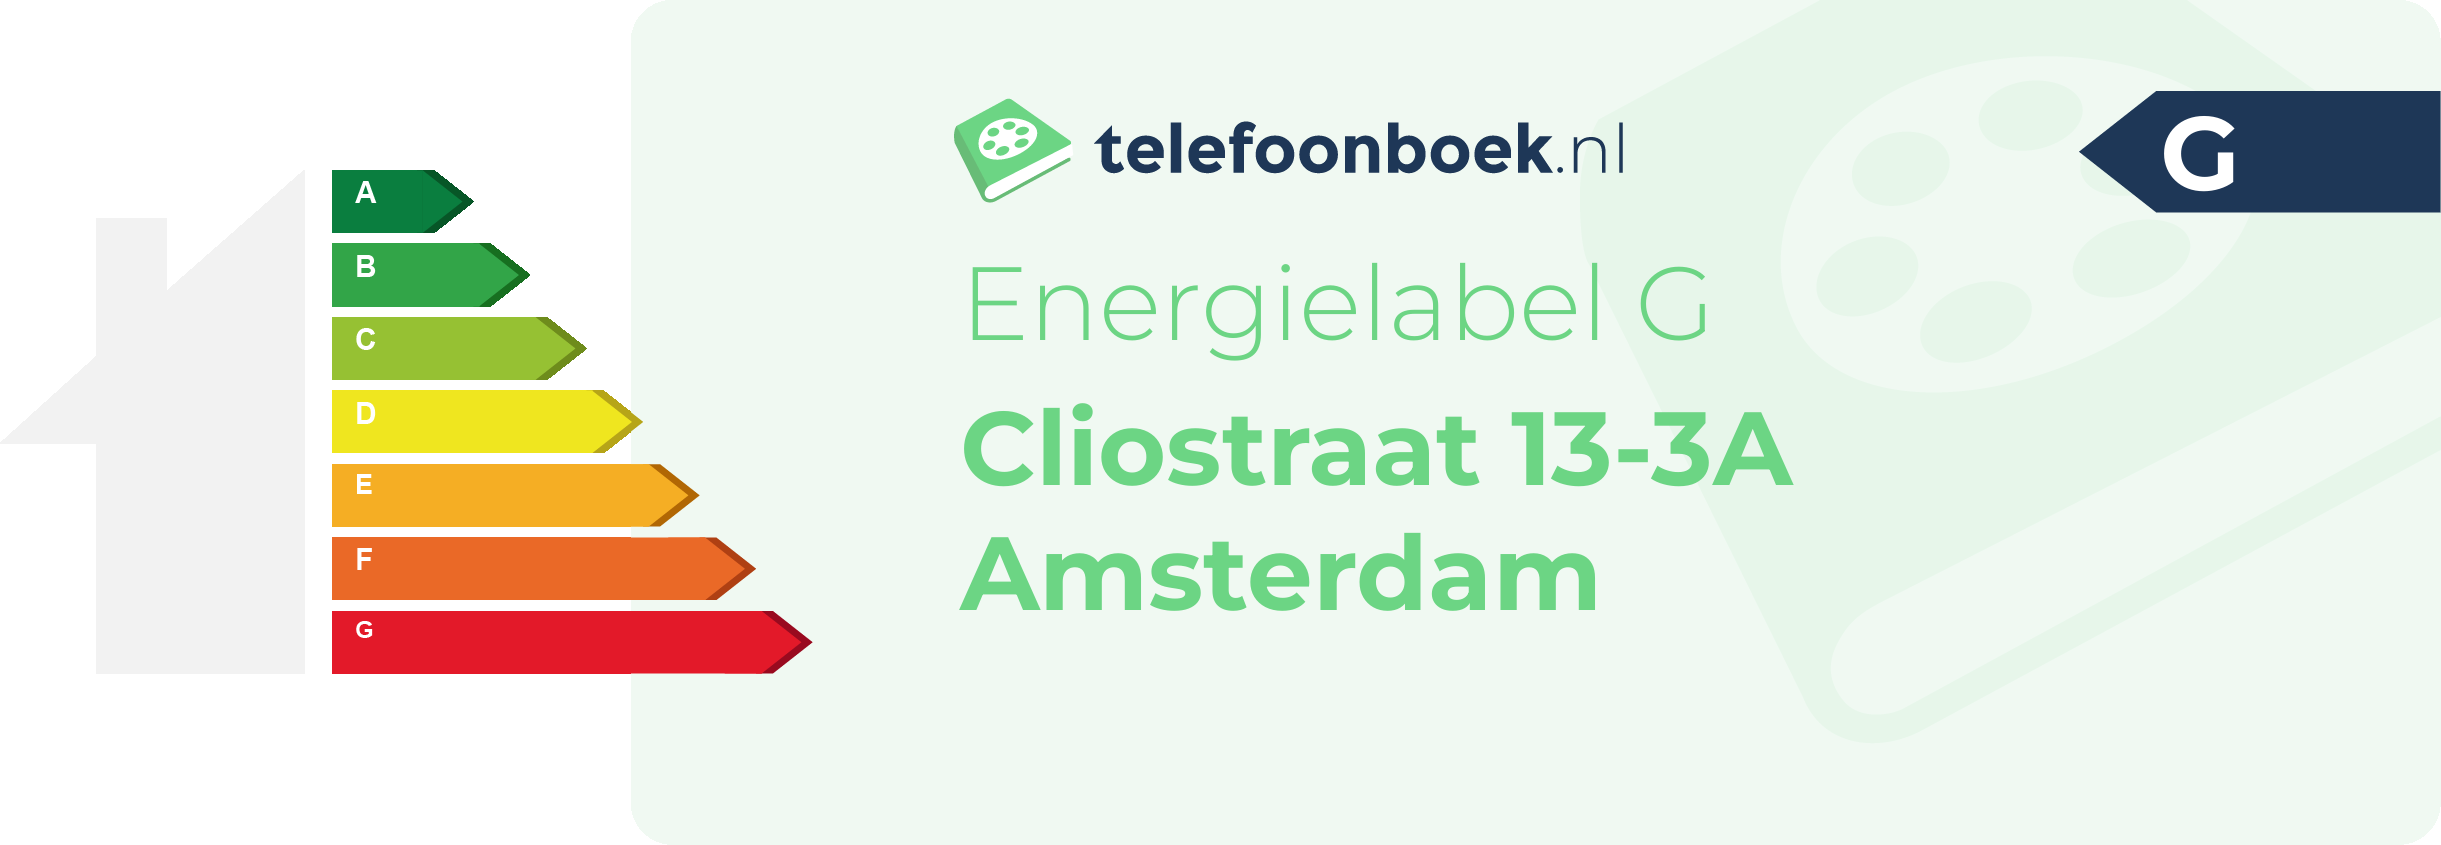 Energielabel Cliostraat 13-3A Amsterdam